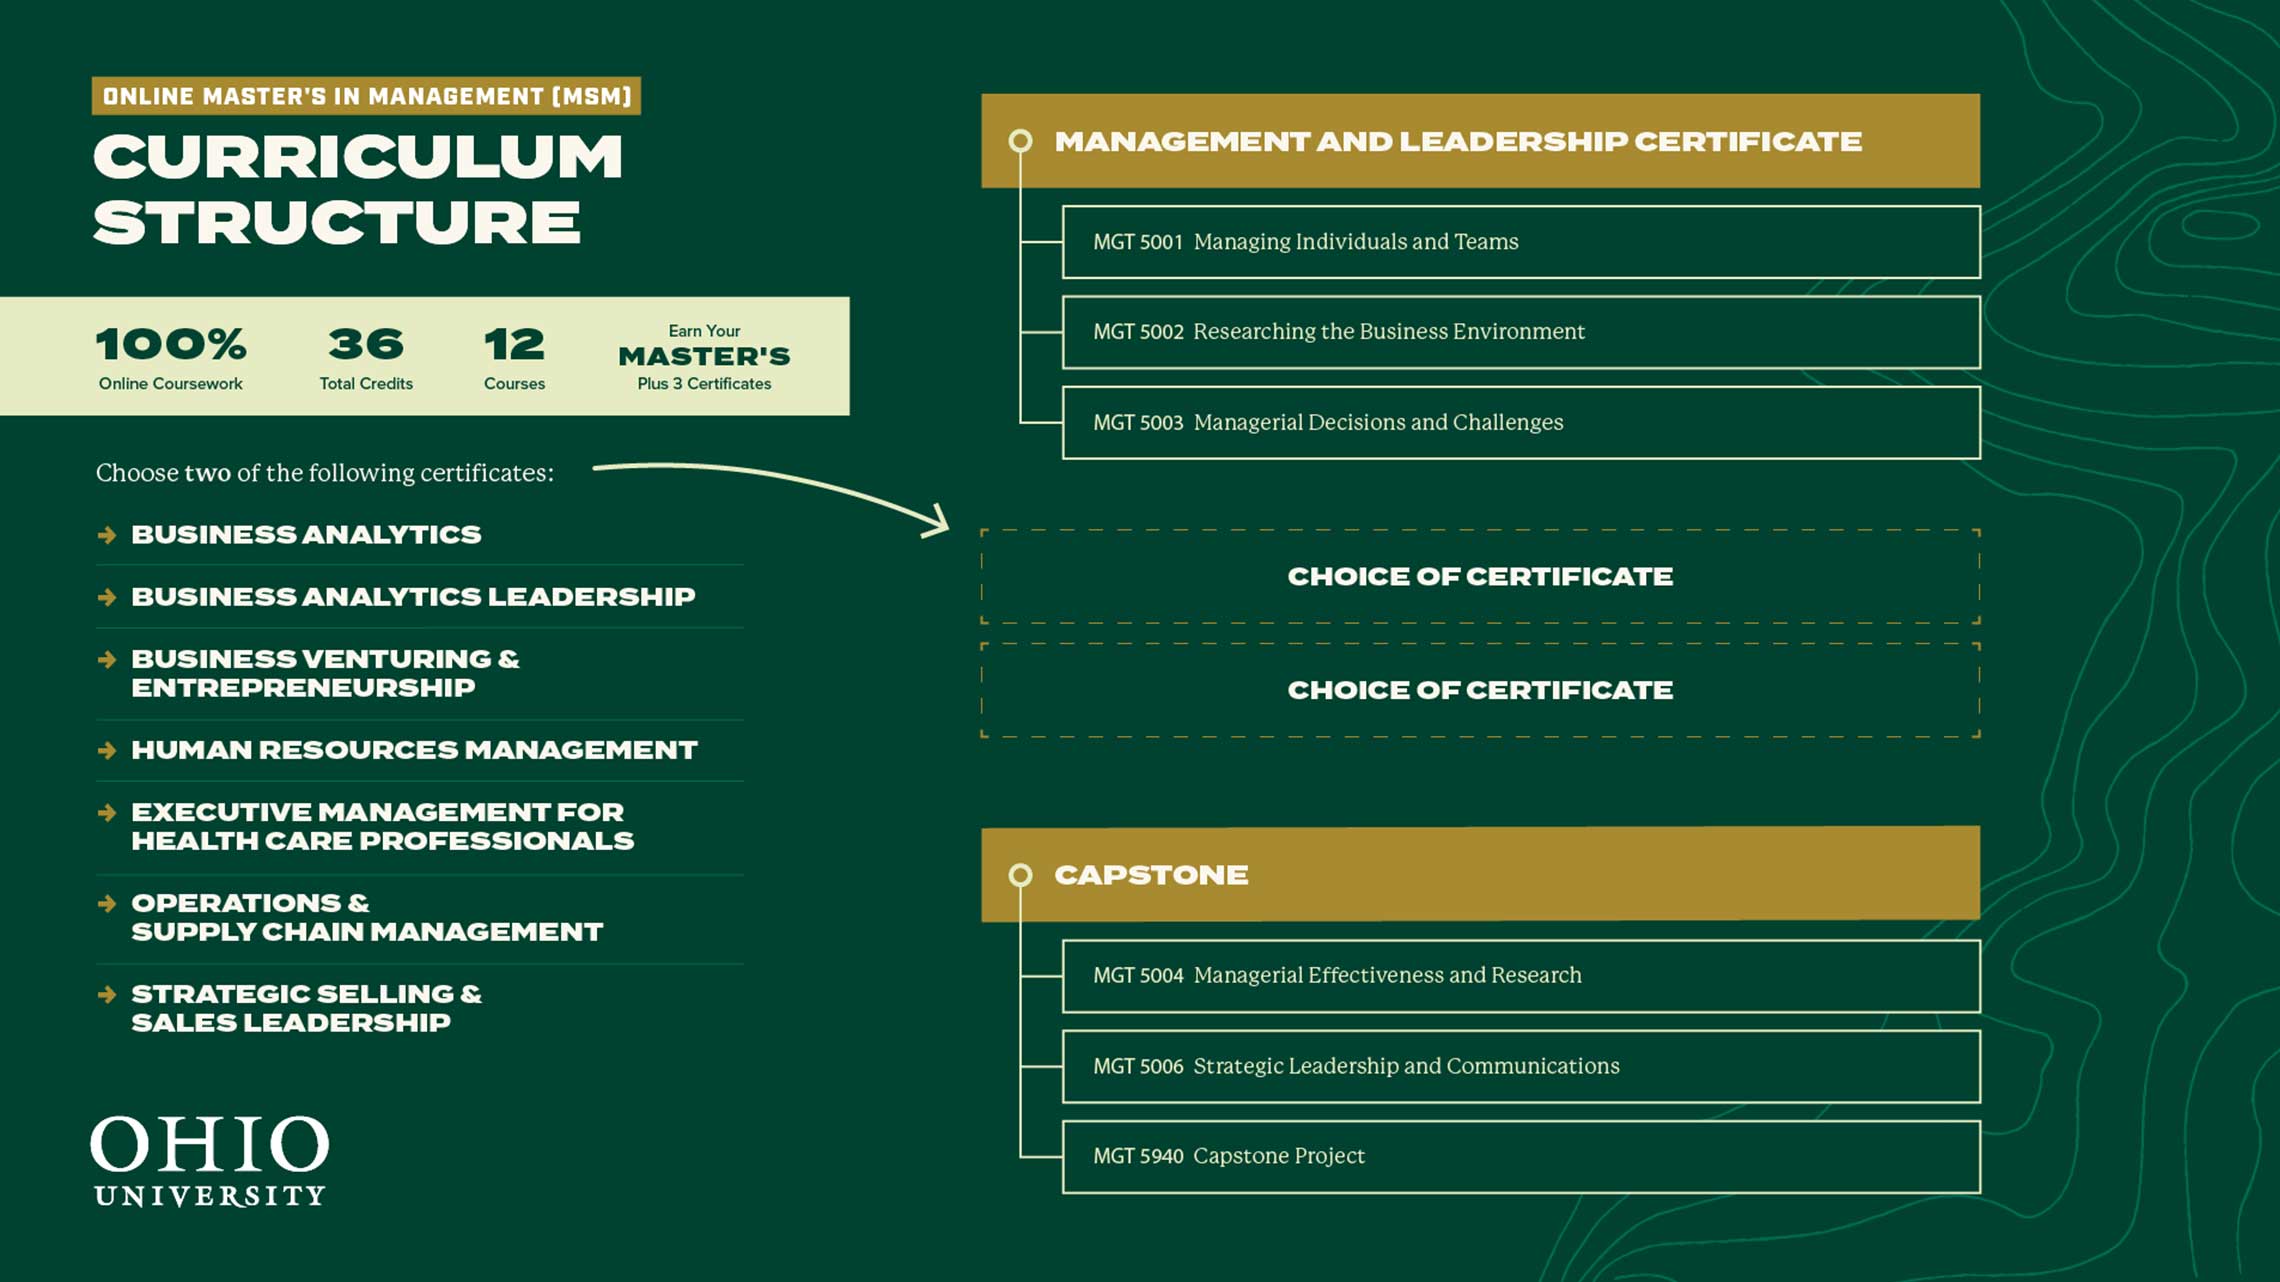 Online Master's in Management Curriculum Structure